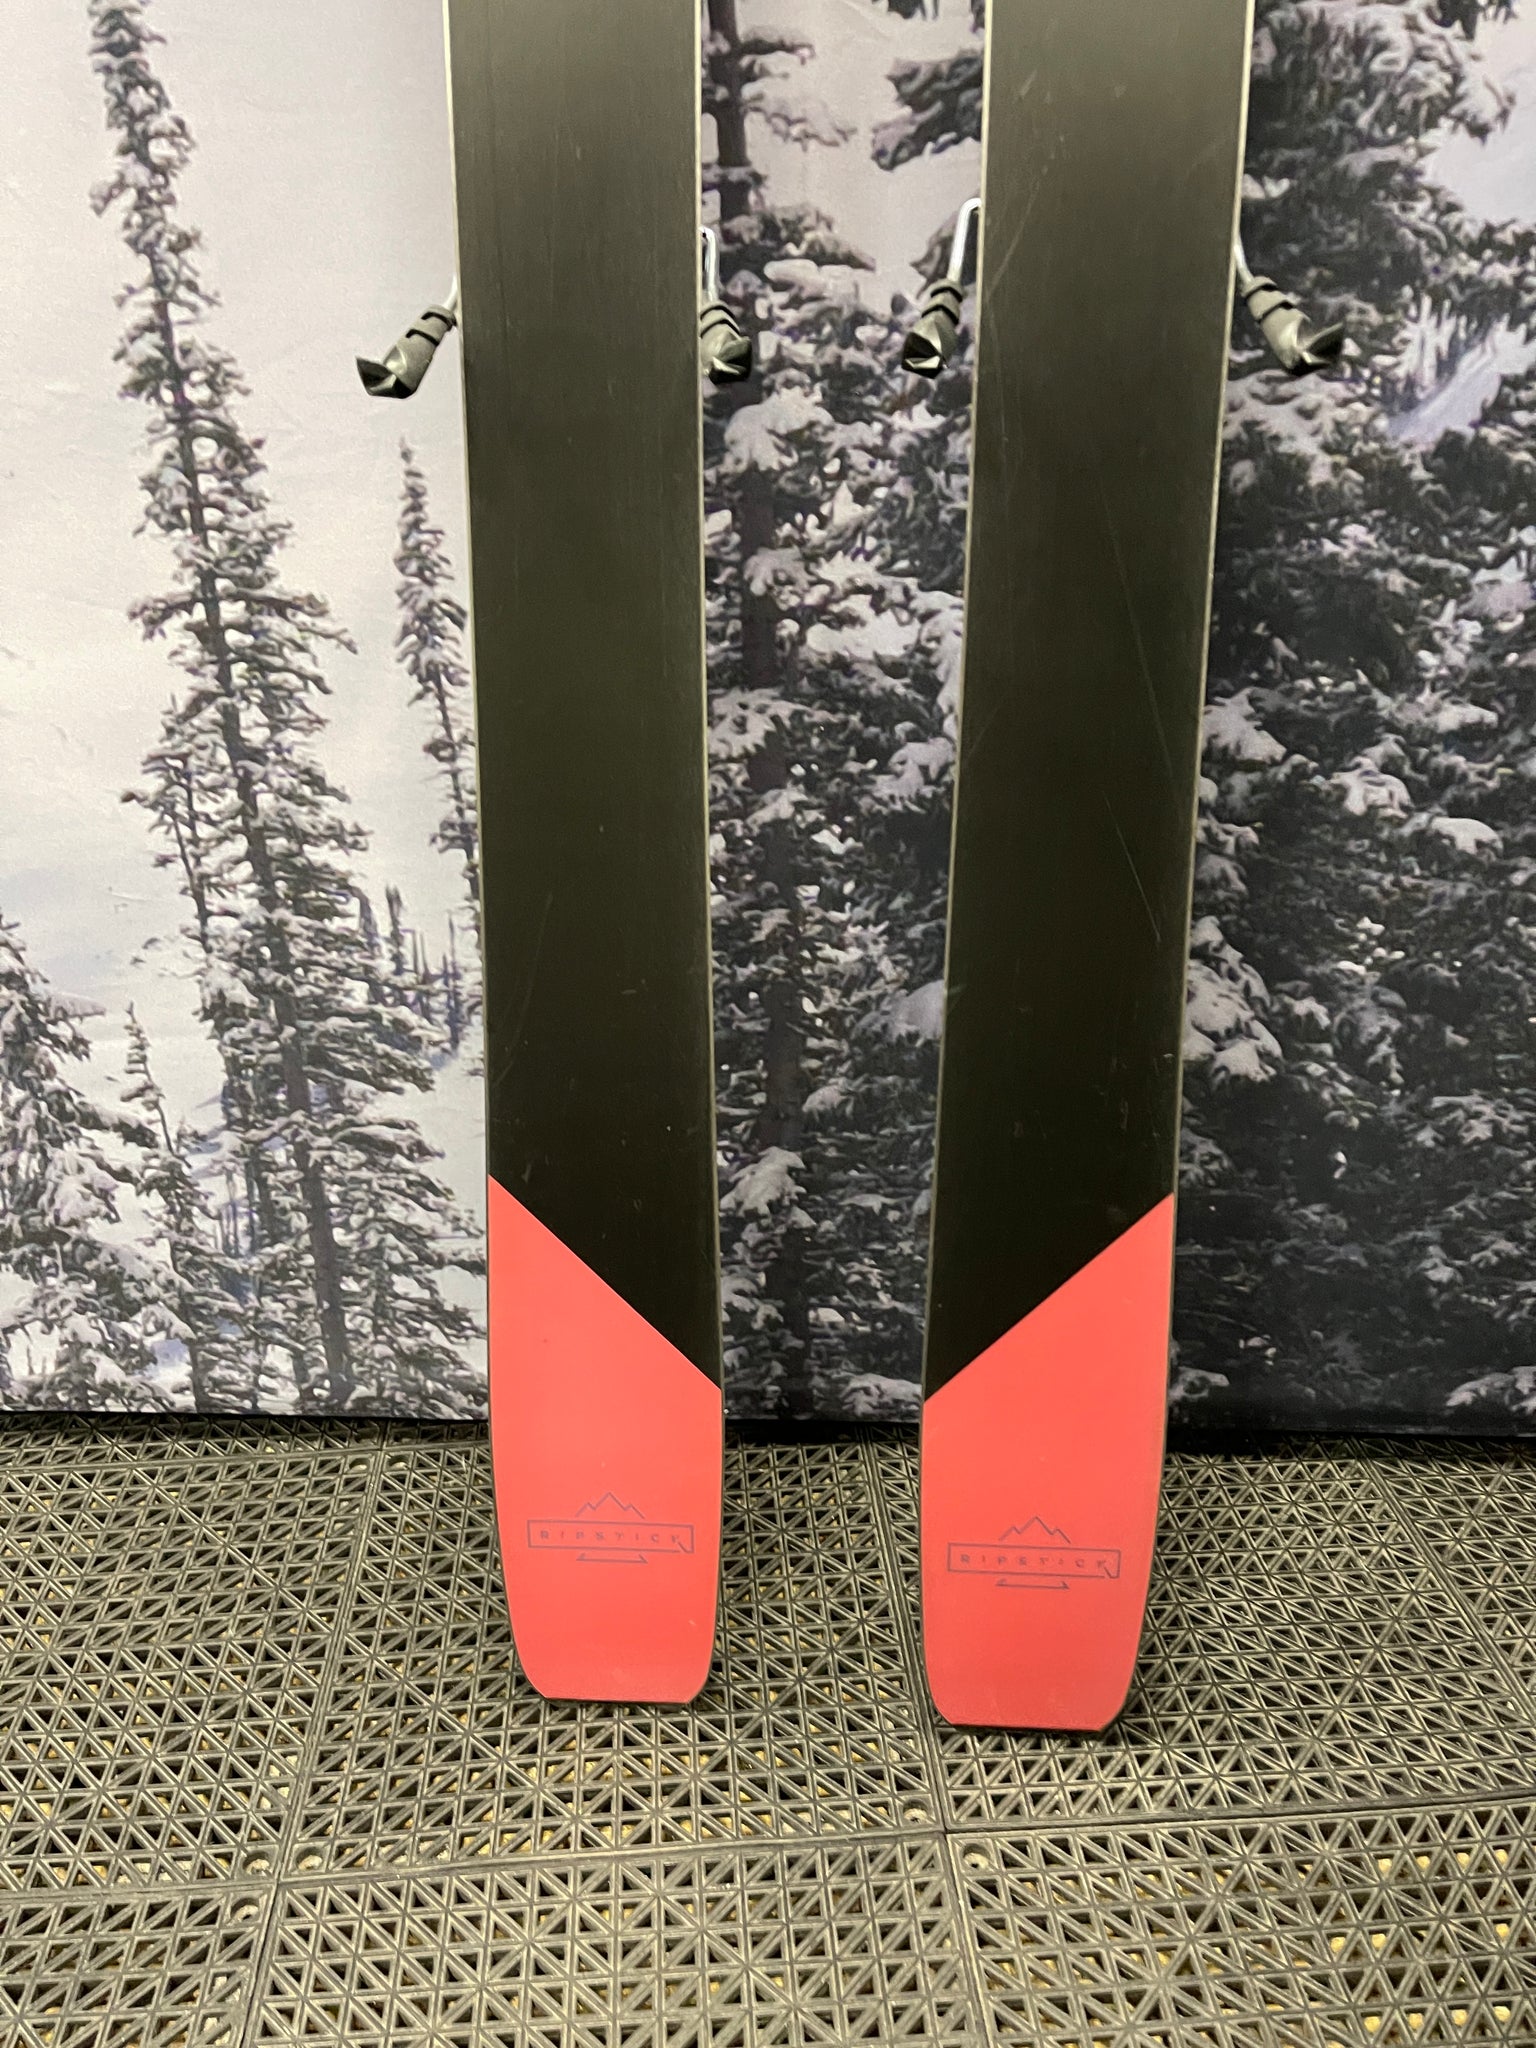 USED Elan Ripstick 94 W 170cm w/ Tyrolia SP 10 Bindings - 20/21 Women's Ski